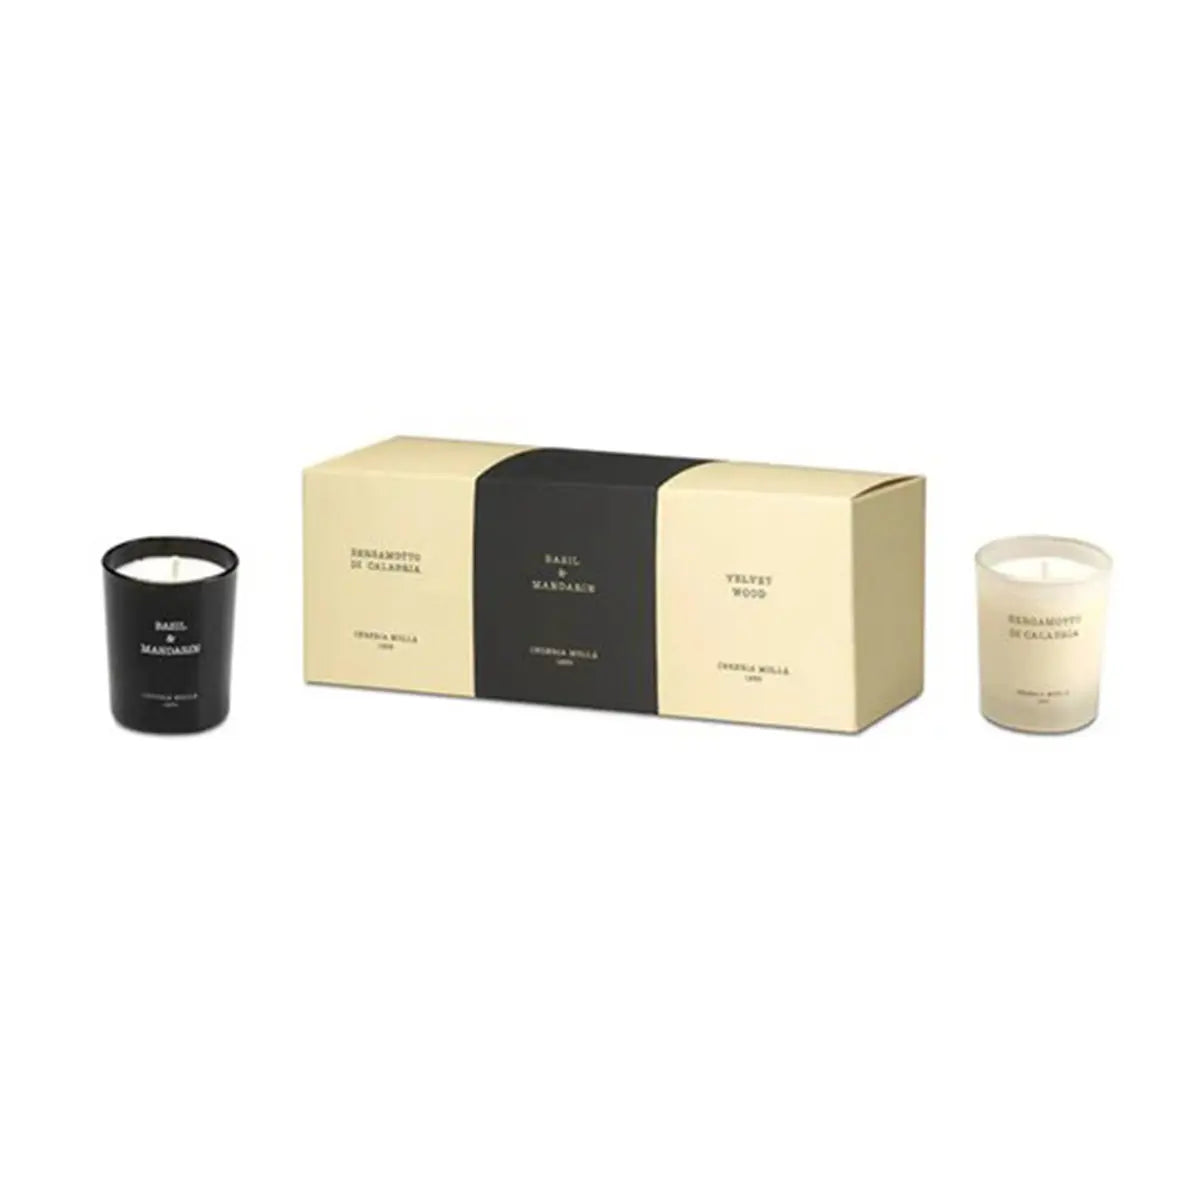 Cereria Molla 3 Votive Luxury Candle Gift Set with Bergamotto di calabria, Basil and Mandarin, Velvet Wood